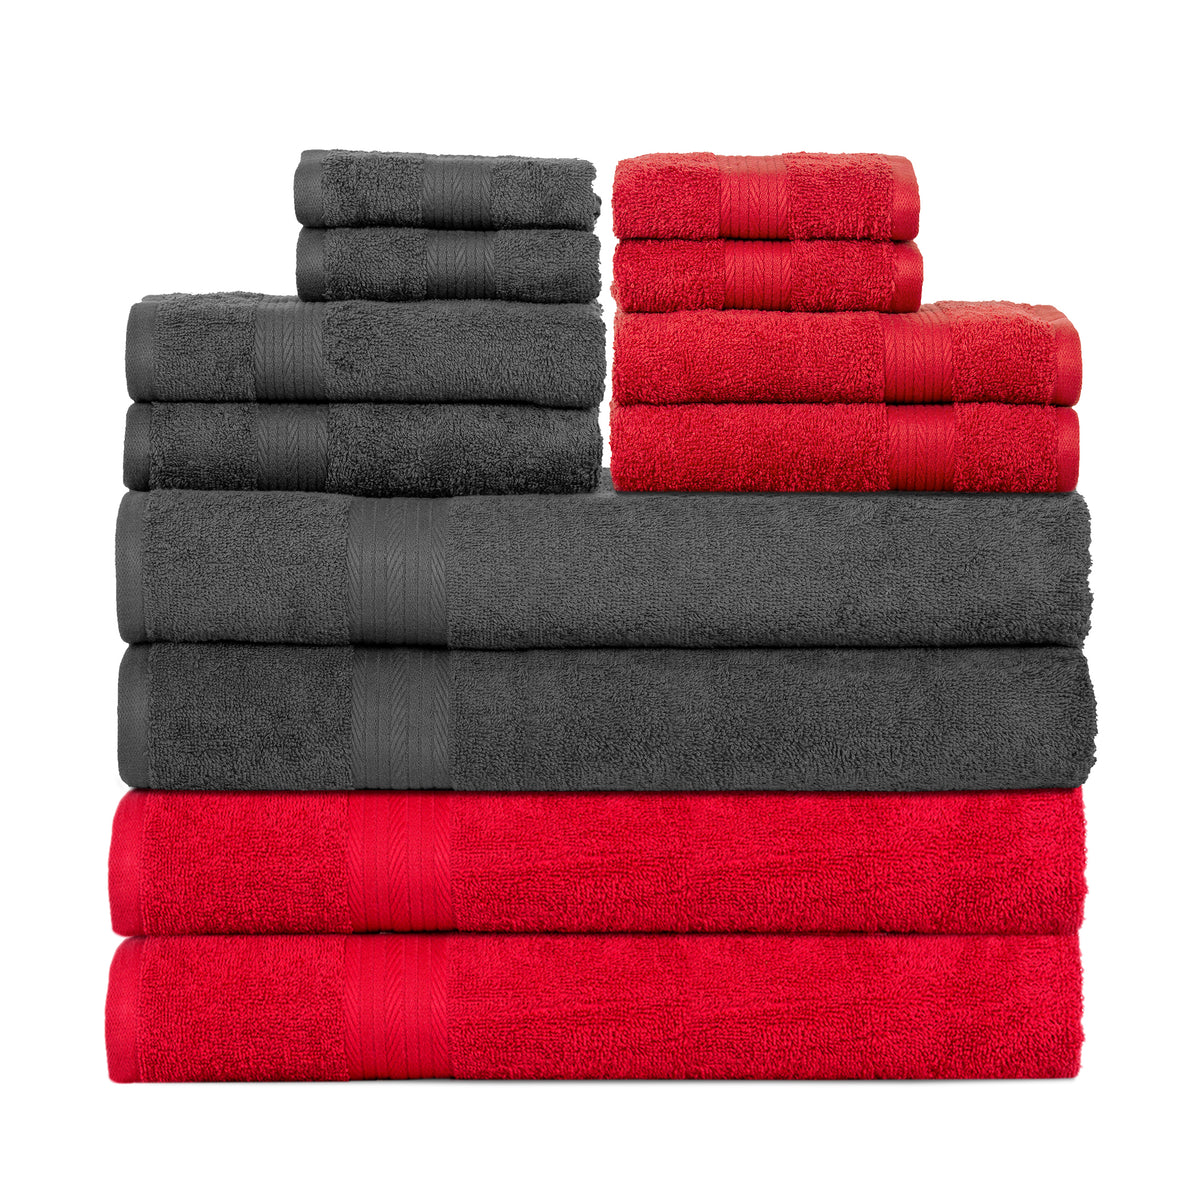 Vibrant Trio: Red, Gray, and White Bathroom Towel Set